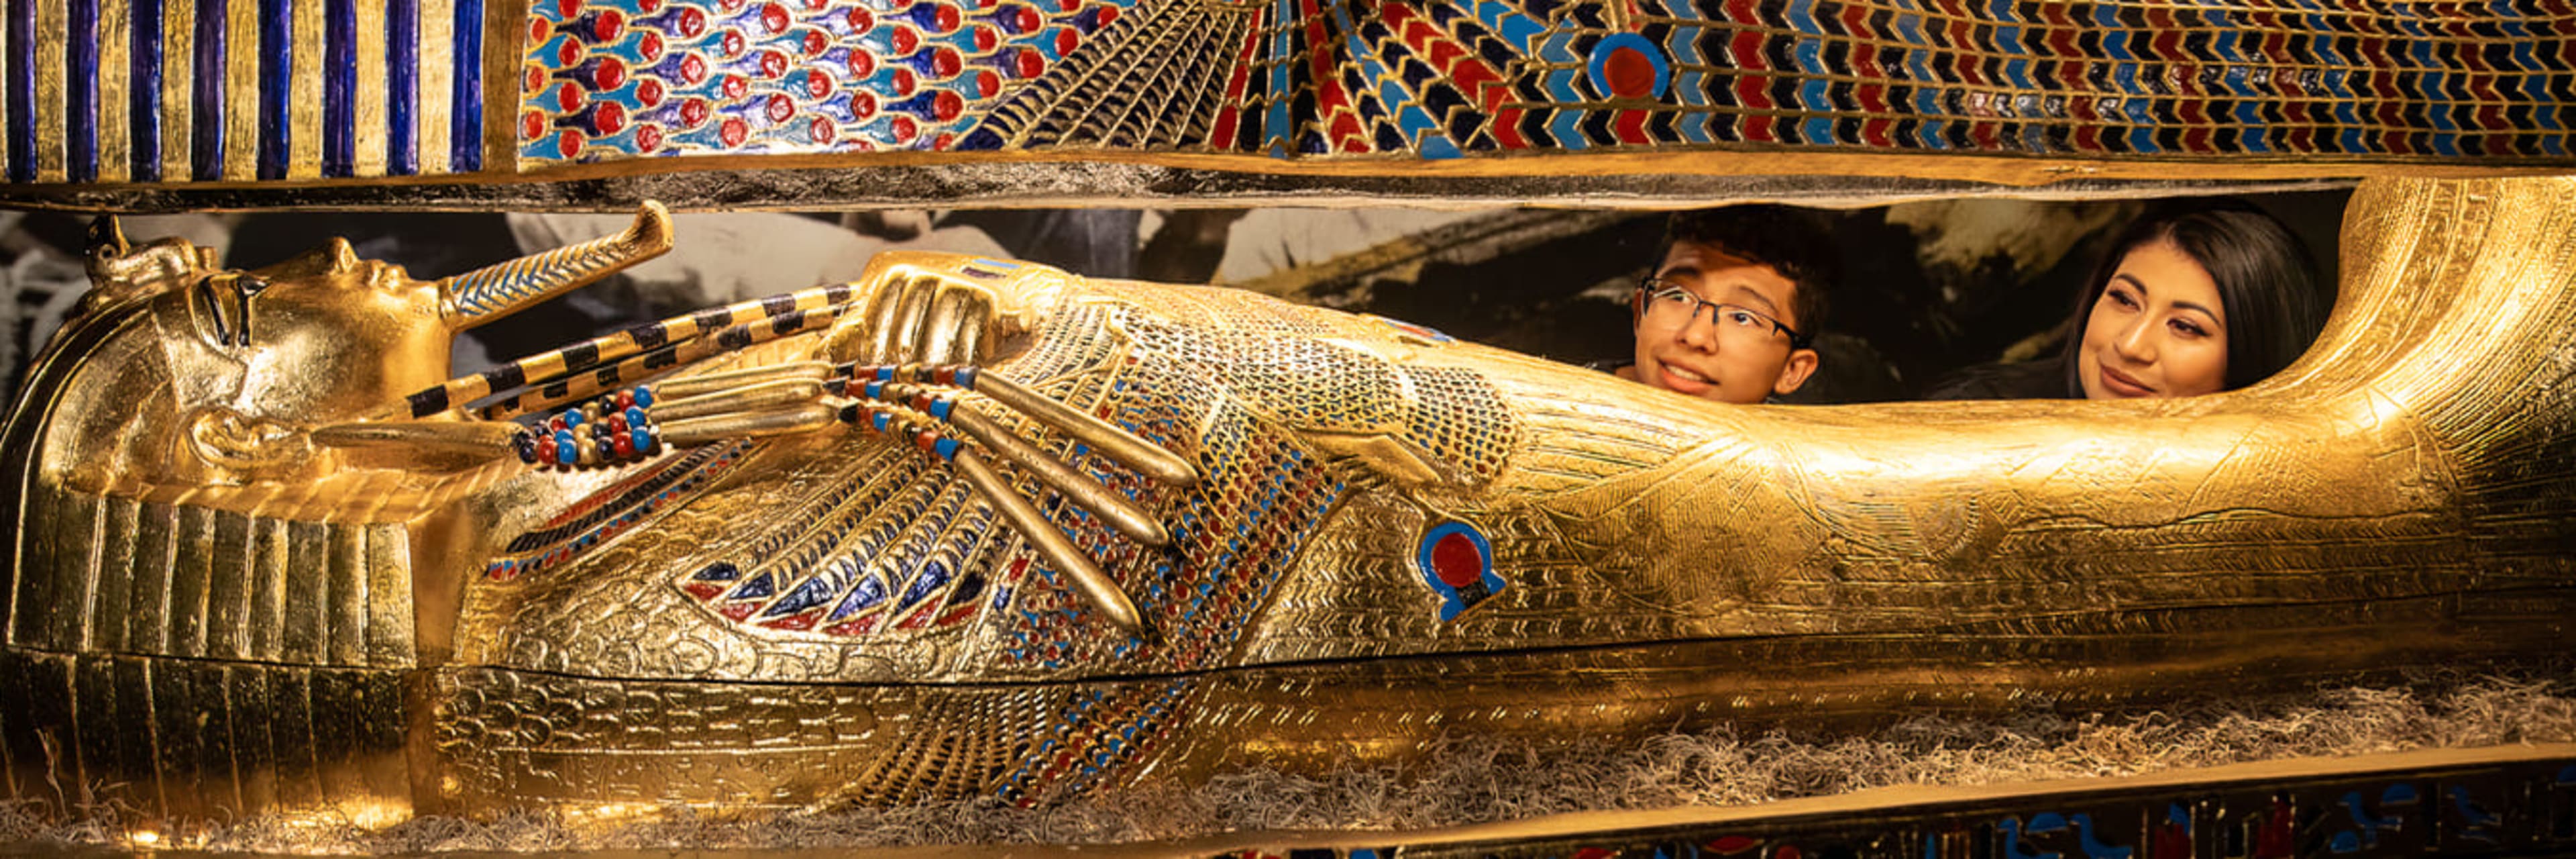 Discovering King Tut's Tomb at Luxor, Las Vegas